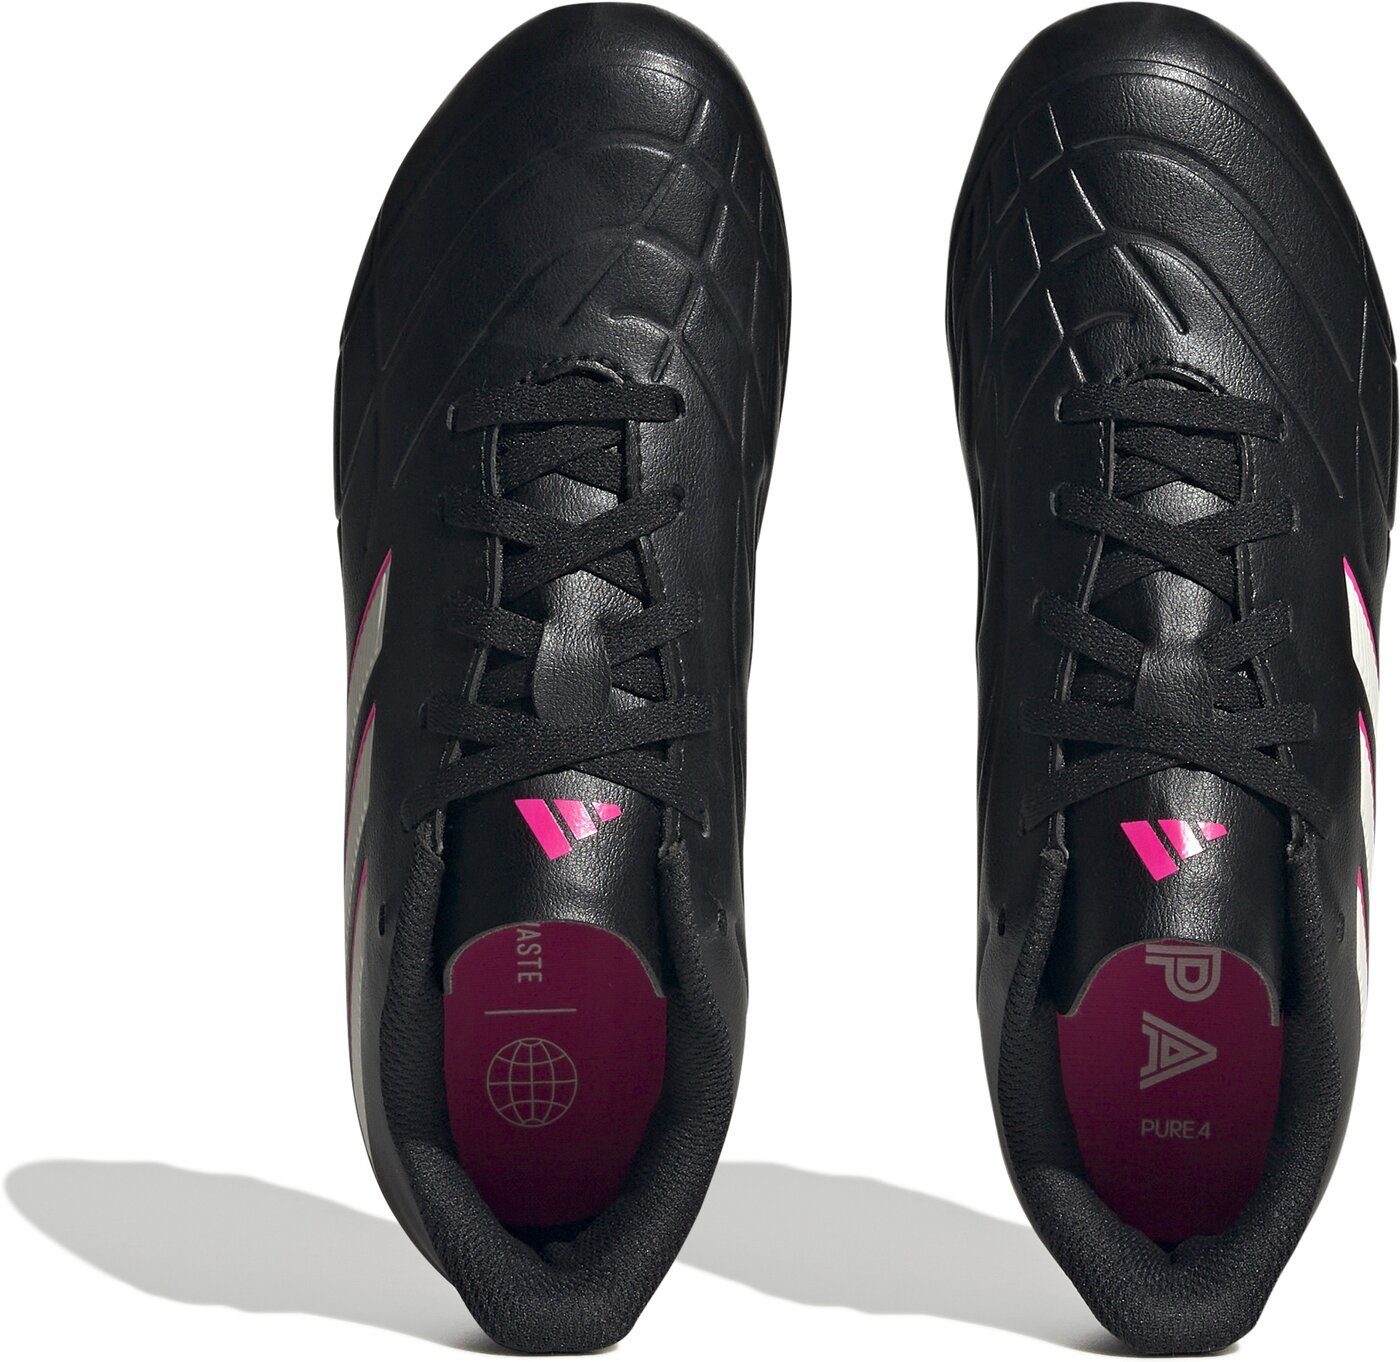 FxG J Sportswear PURE.4 Performance Fußballschuh COPA adidas adidas